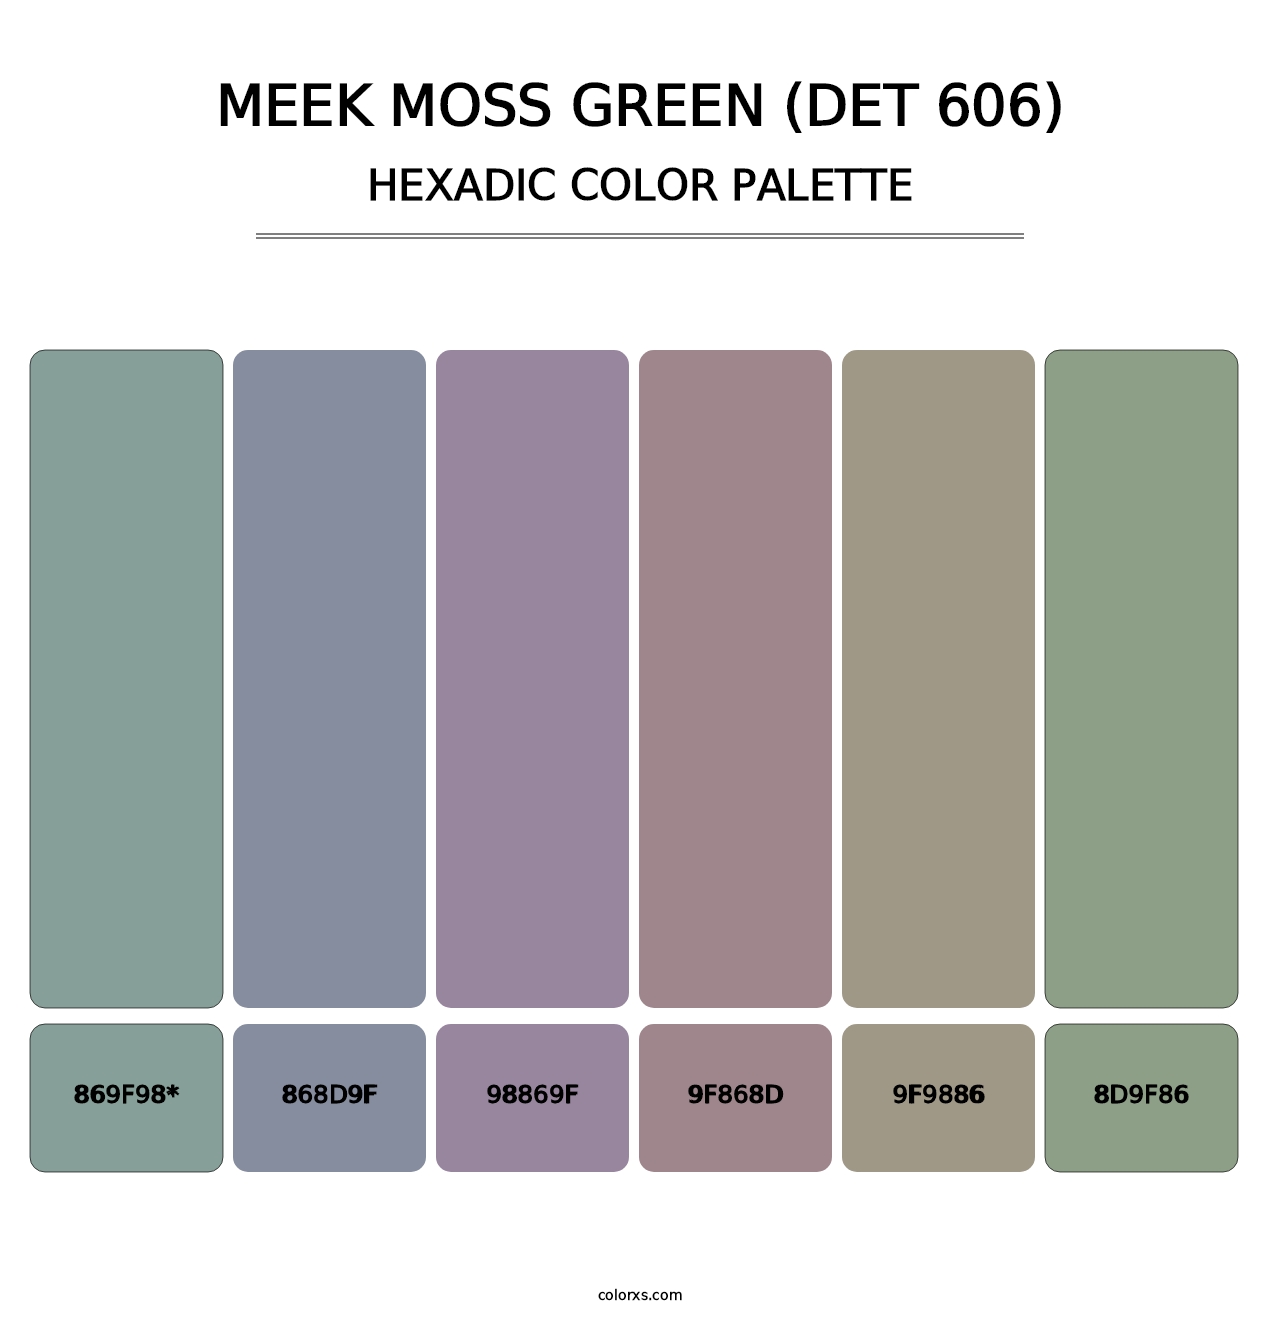 Meek Moss Green (DET 606) - Hexadic Color Palette